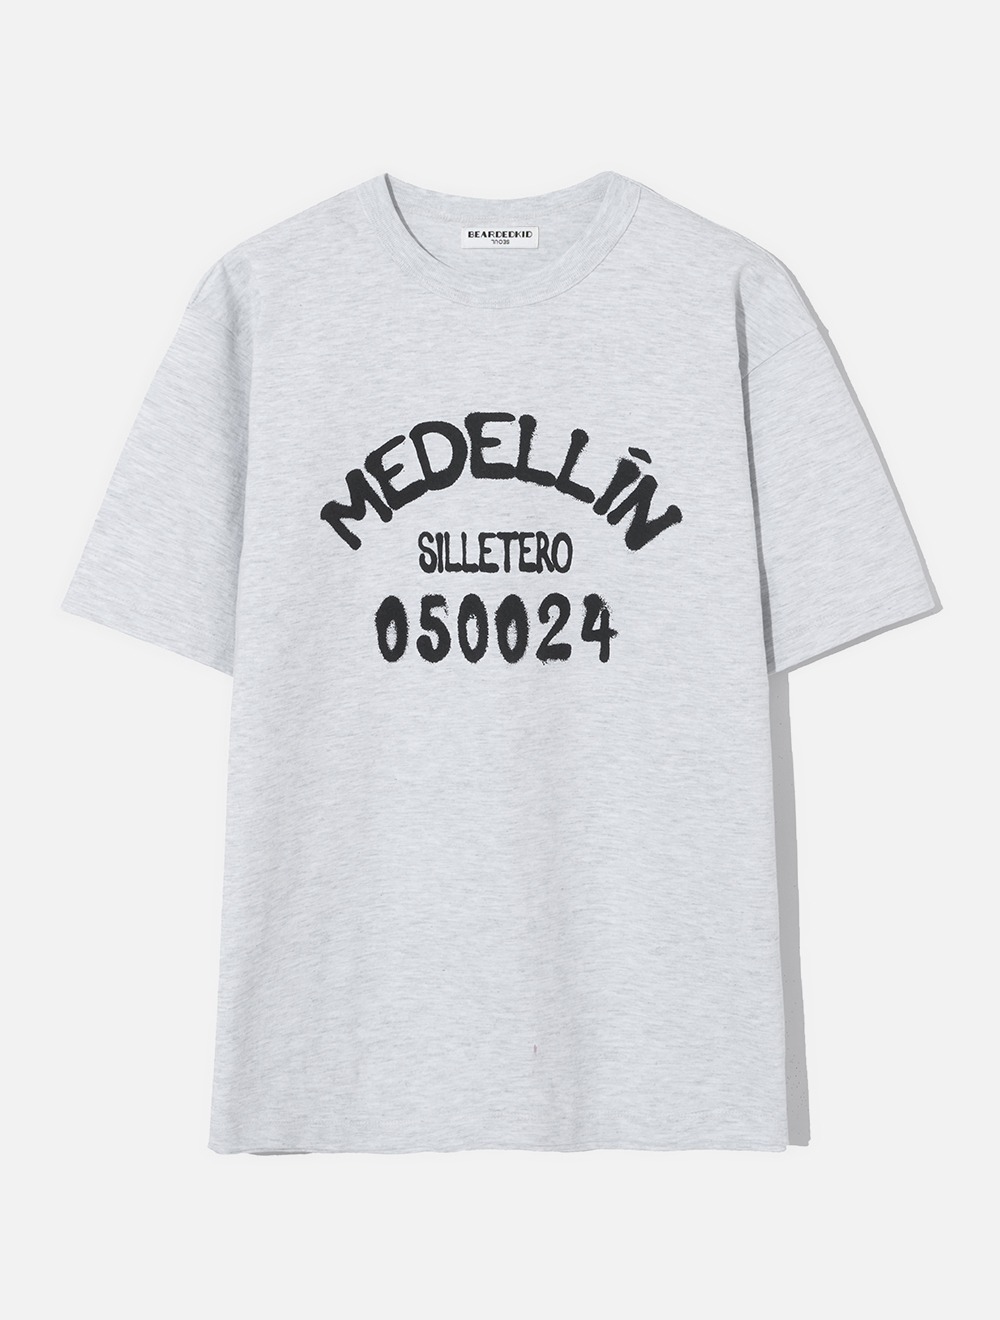 Medellin Half Sleeve T-shirt_Ash Grey